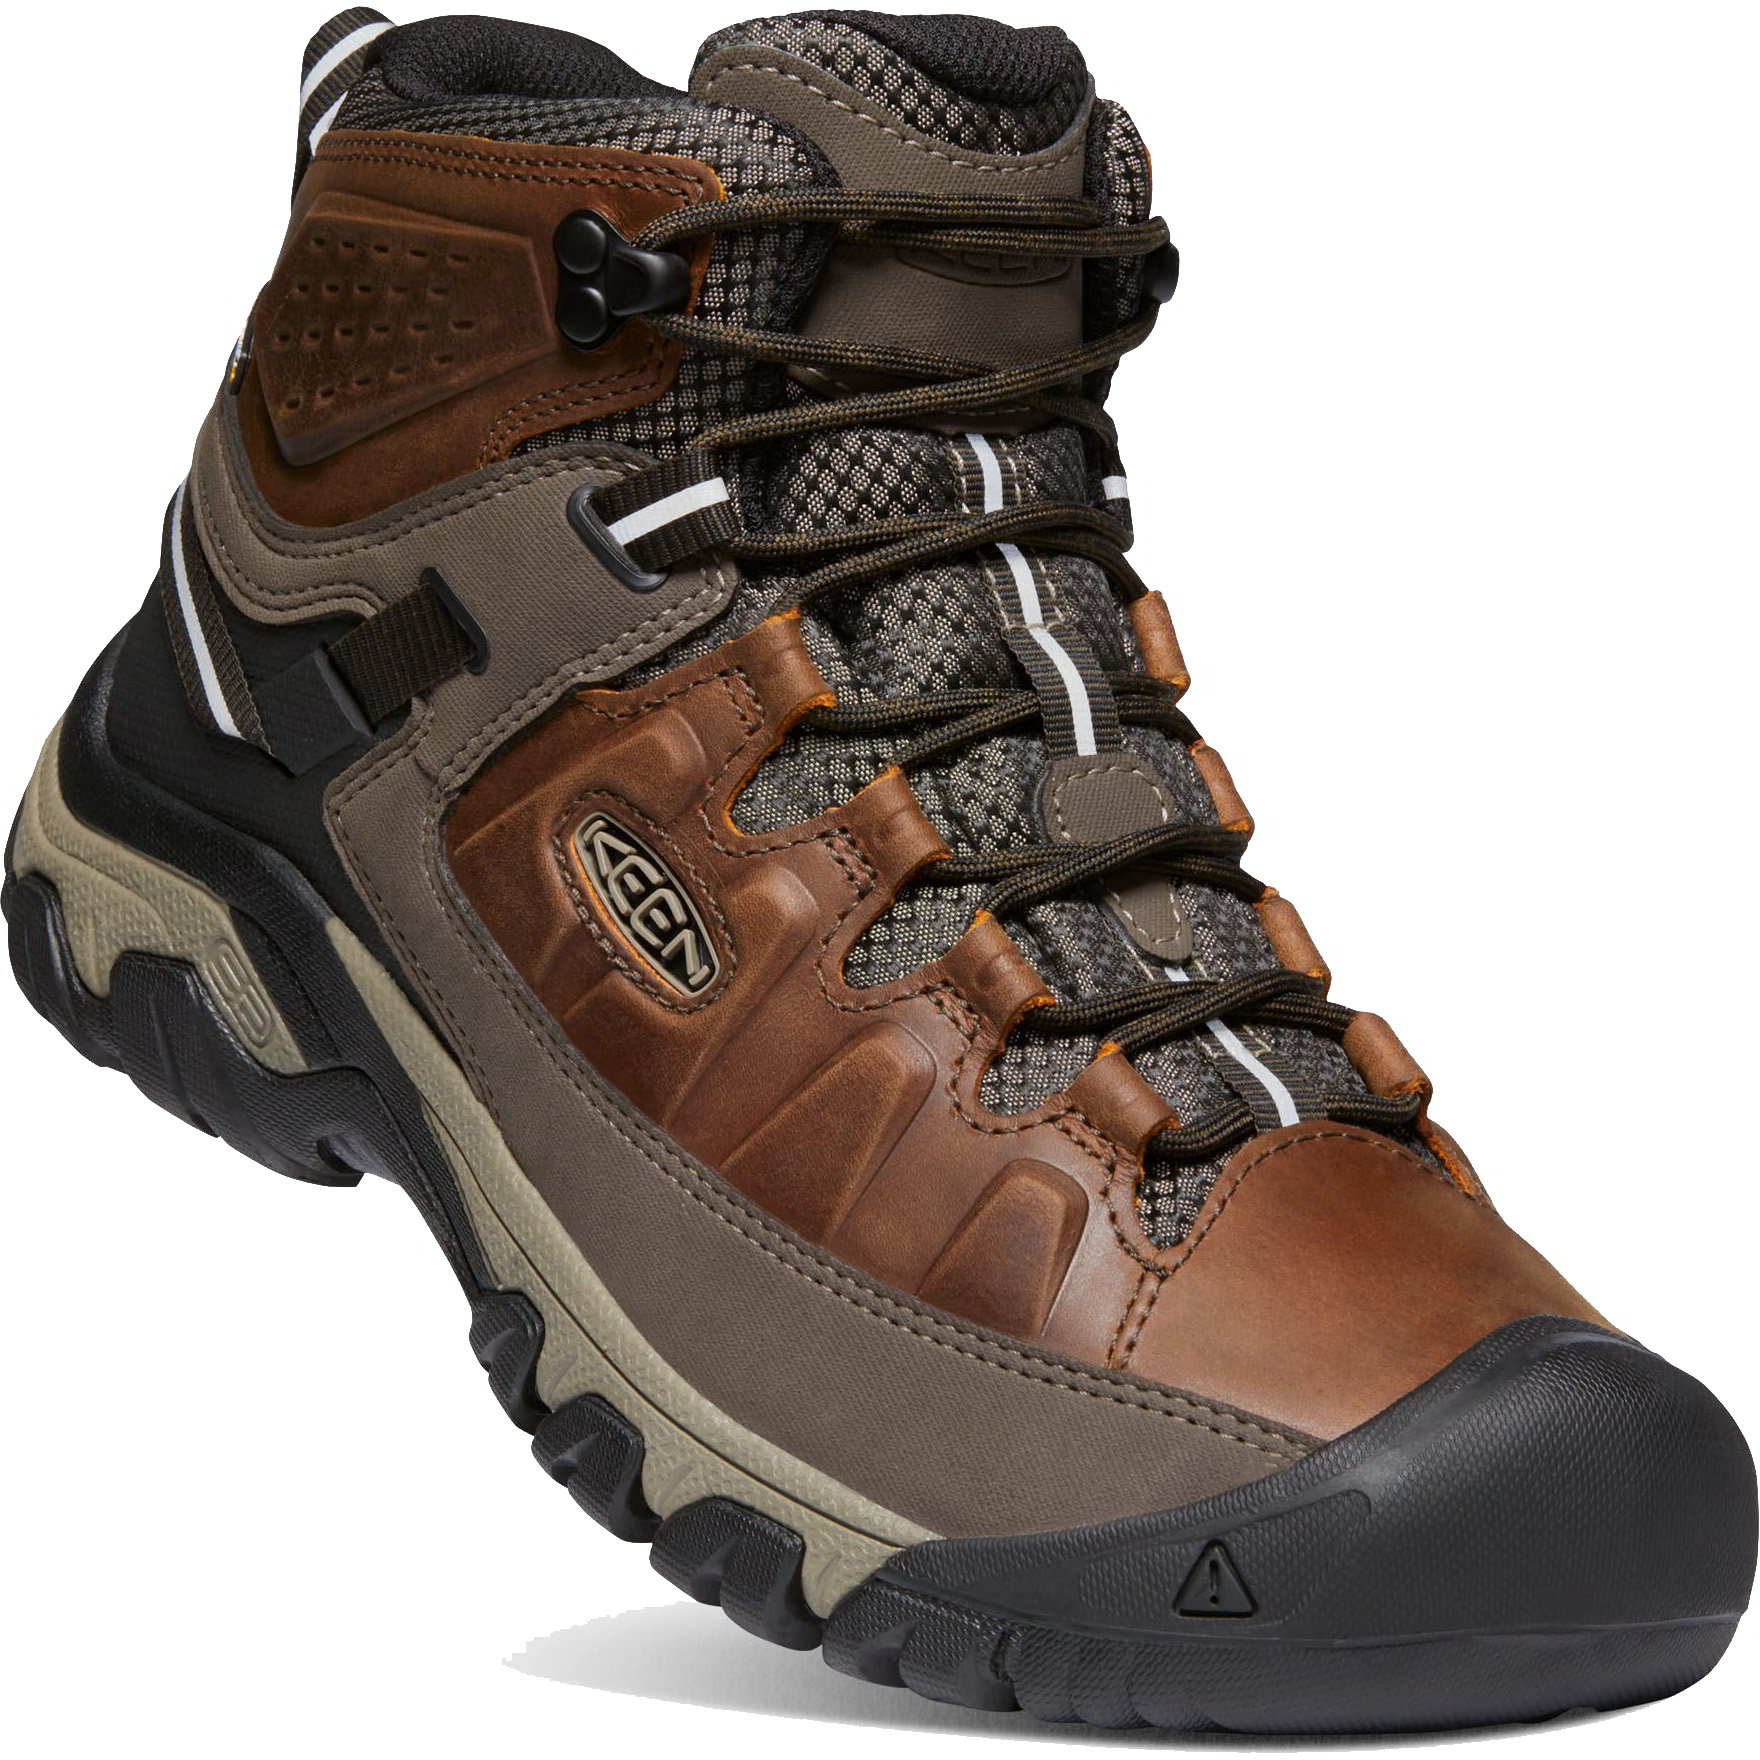 Keen Men's Targhee III Mid WP Waterproof Walking Hiking Boots - UK 8.5 / EU 42.5 / US 9.5